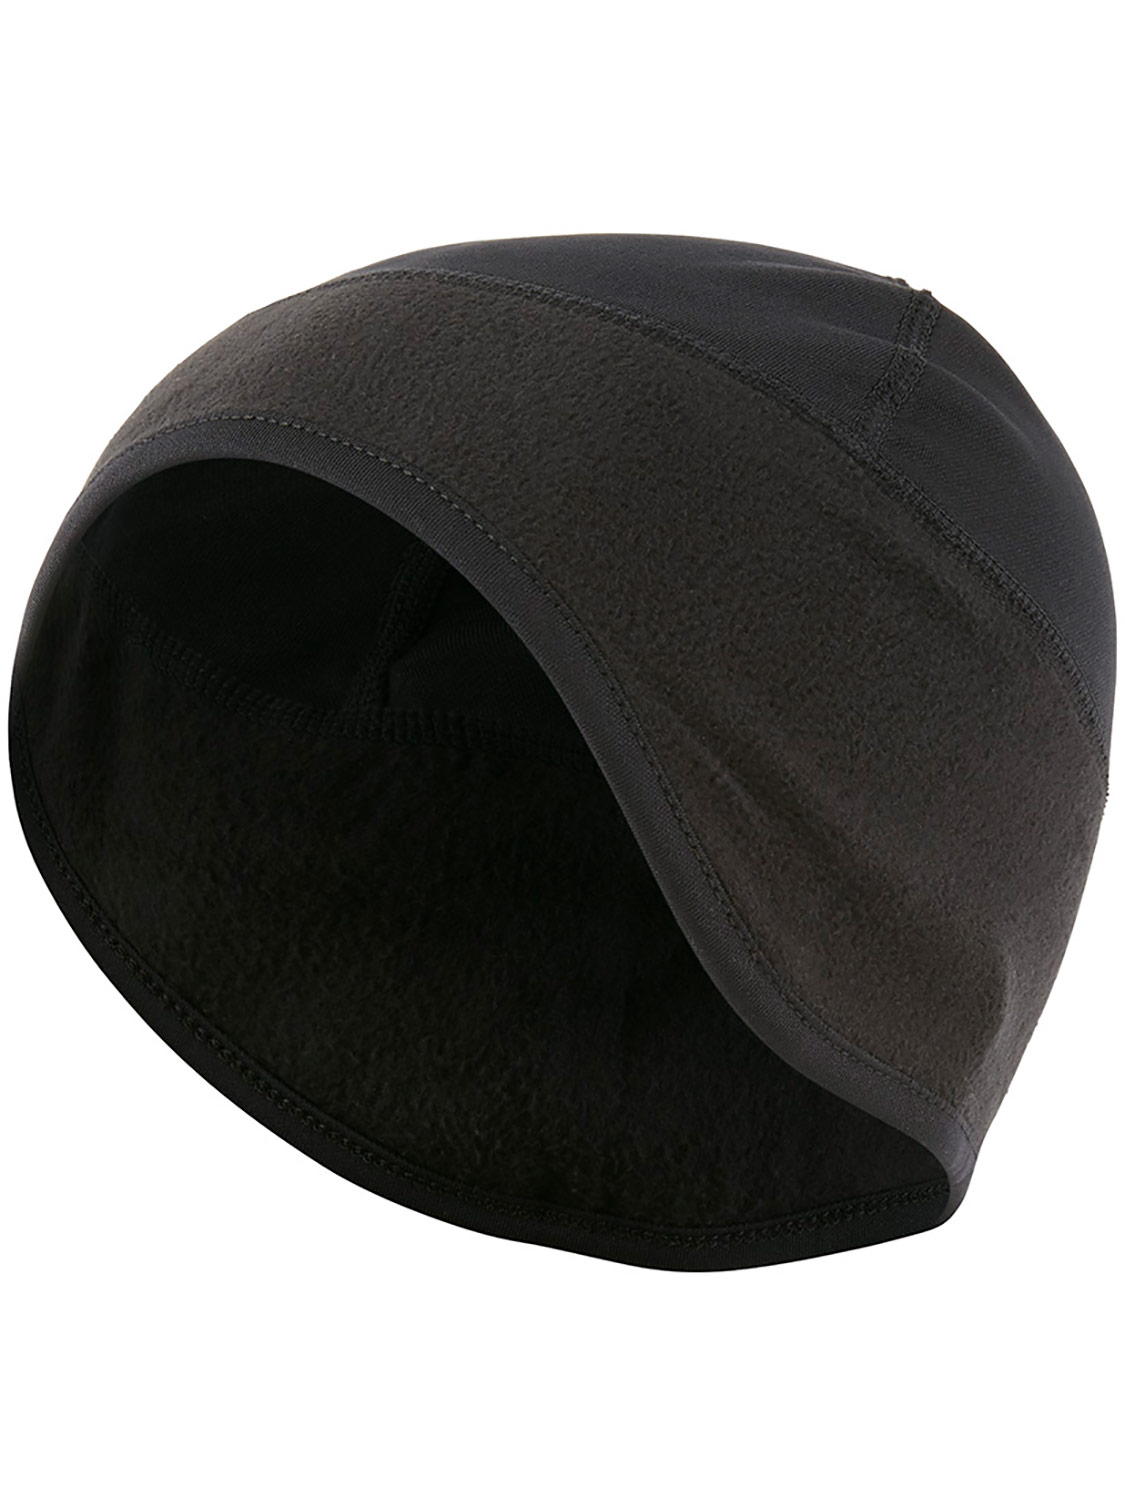 Surfanic Baz Helmet Liner Black - Size: ONE